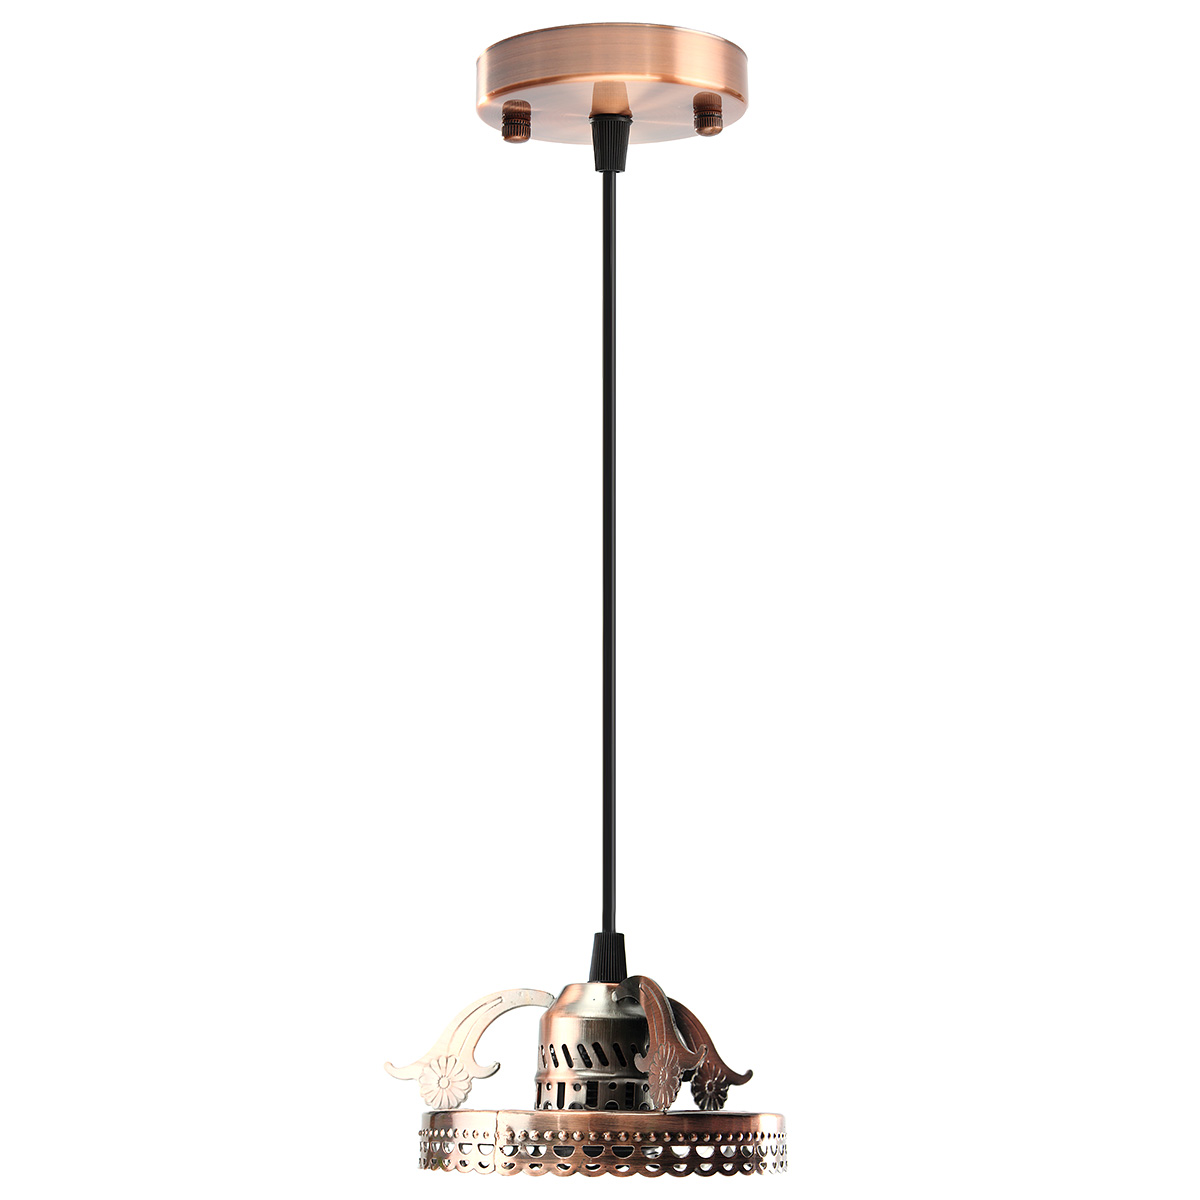 Antique-Industrial-Vintage-Ceiling-Pendant-Light-Lamp-Bulb-Chandelier-Fixture-For-Indoor-Lighting-1113882-3